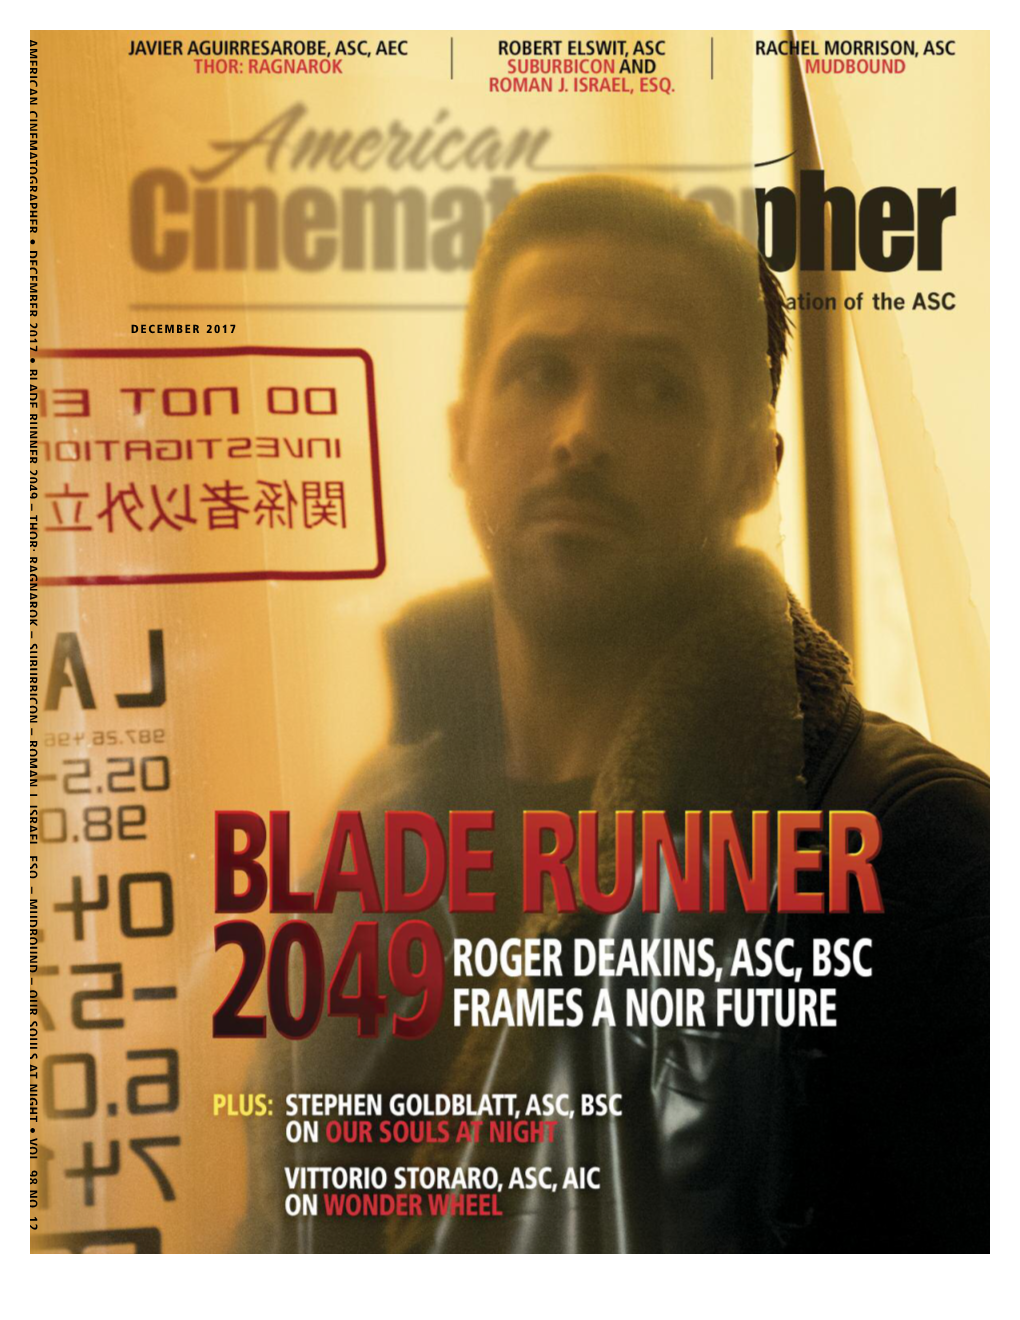 Blade Runner 2049, Roger Deakins, ASC, BSC the “Blade Runner” Beat Who Has Spent 30 Years in Hiding